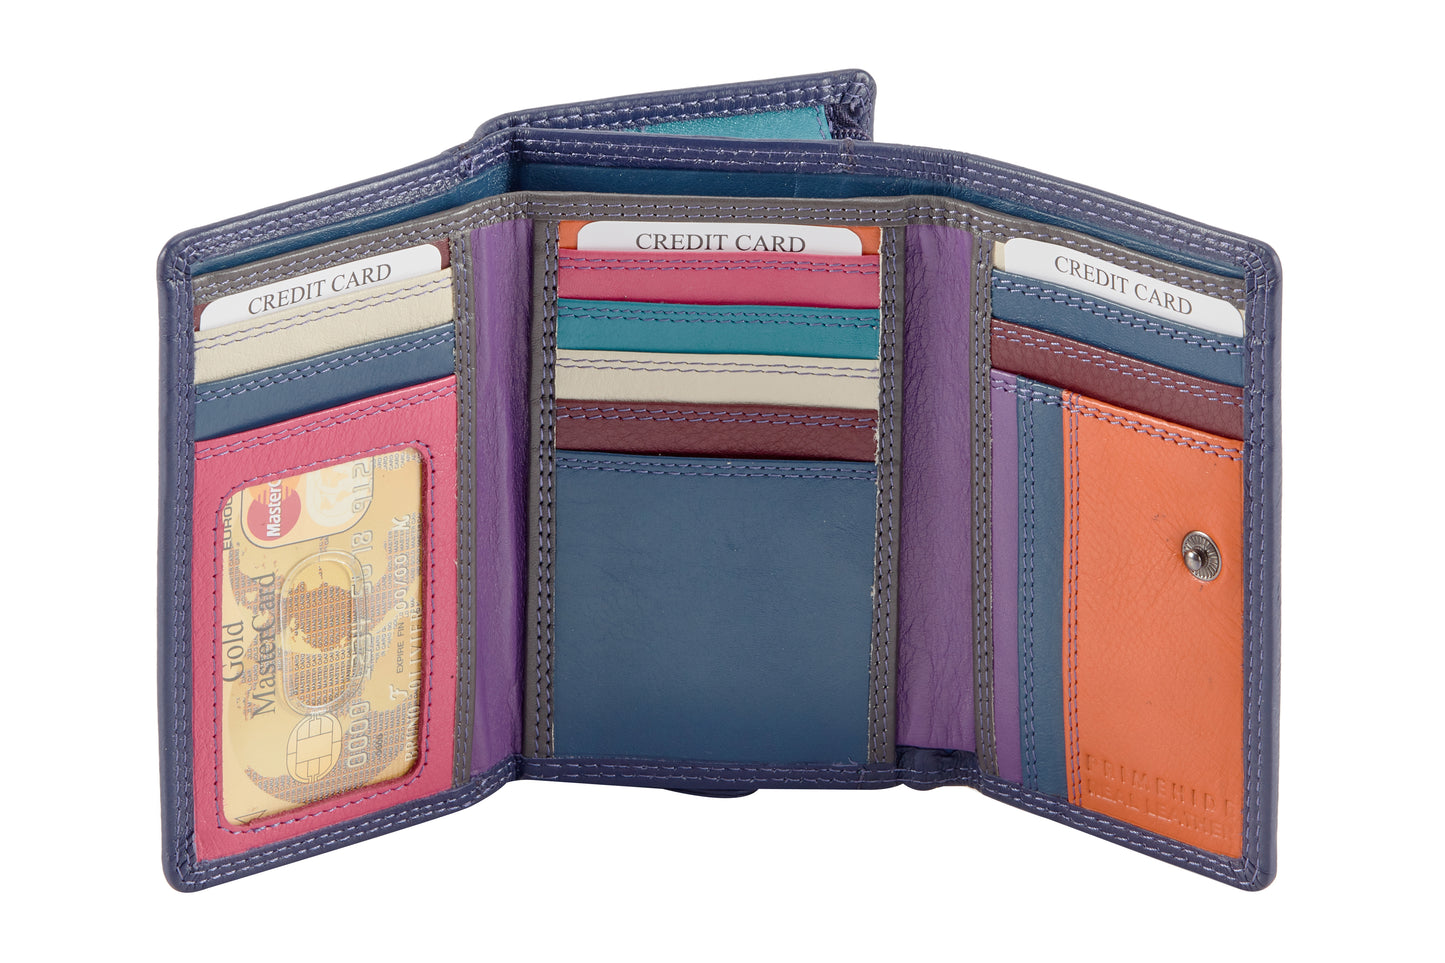 Calfnero Genuine Leather Women's Wallet (6086-Purple)